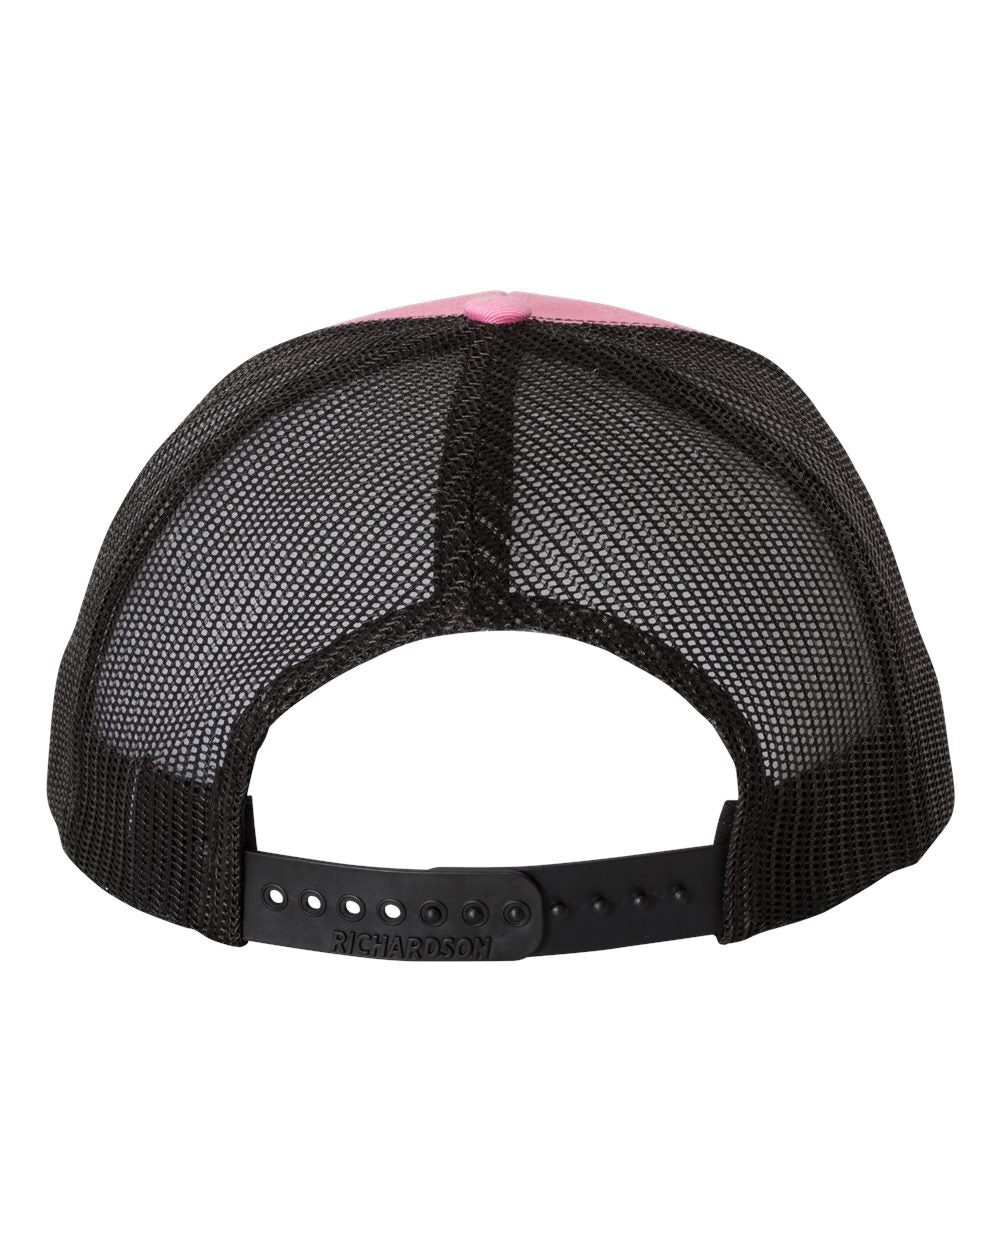 LSU Sailor Mike 3D Snapback Trucker Hat- Hot Pink/ Black - Ten Gallon Hat Co.